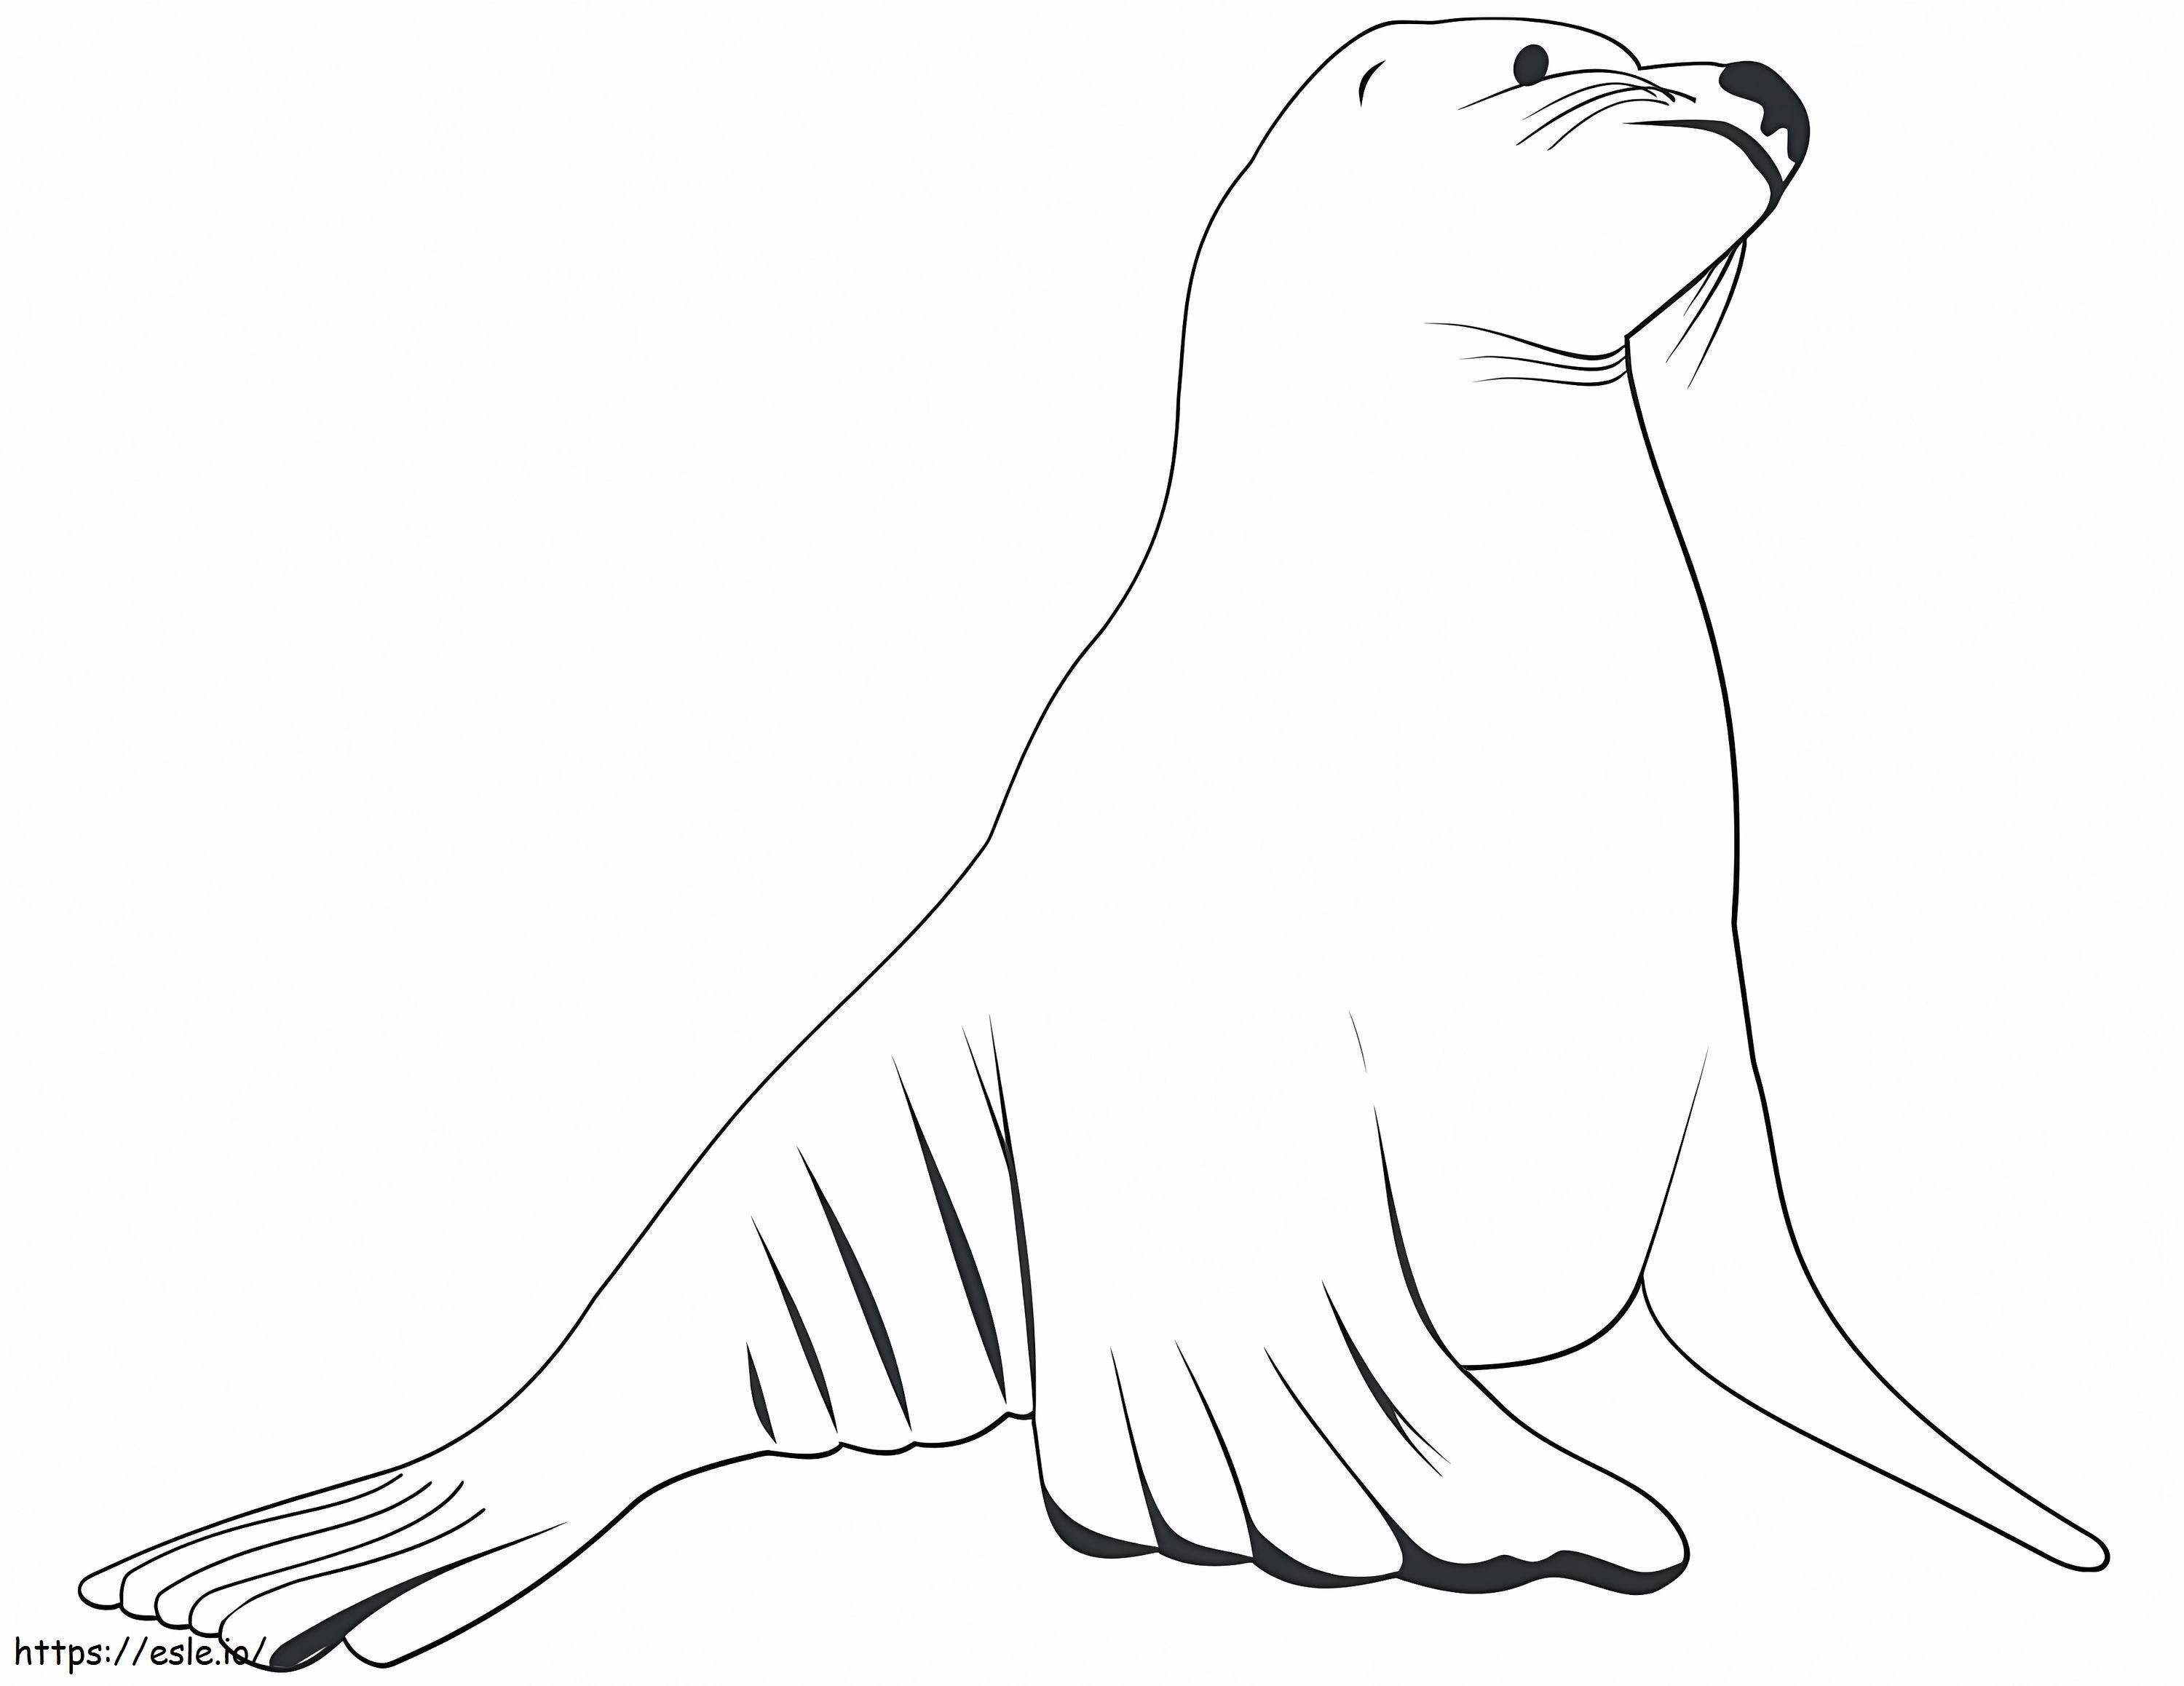 A Sea Lion coloring page